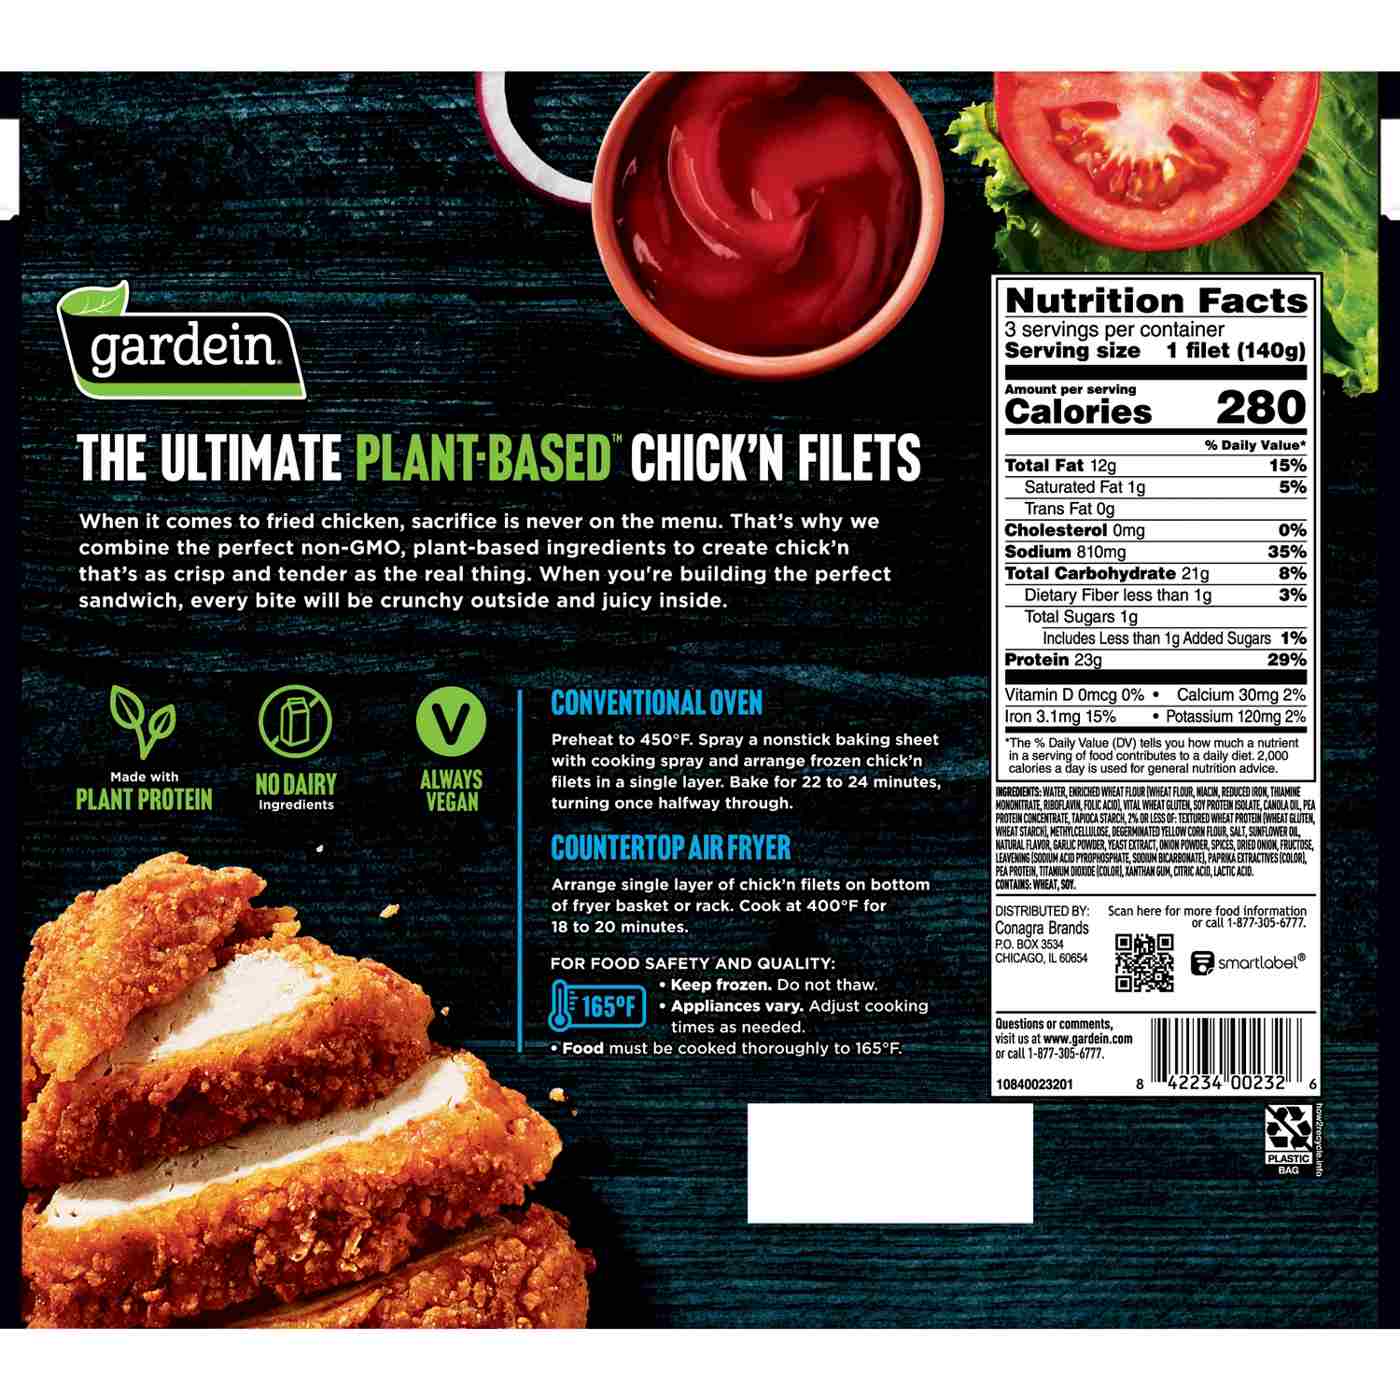 Gardein Ultimate Plant-Based Vegan Chick'n Filets; image 4 of 7